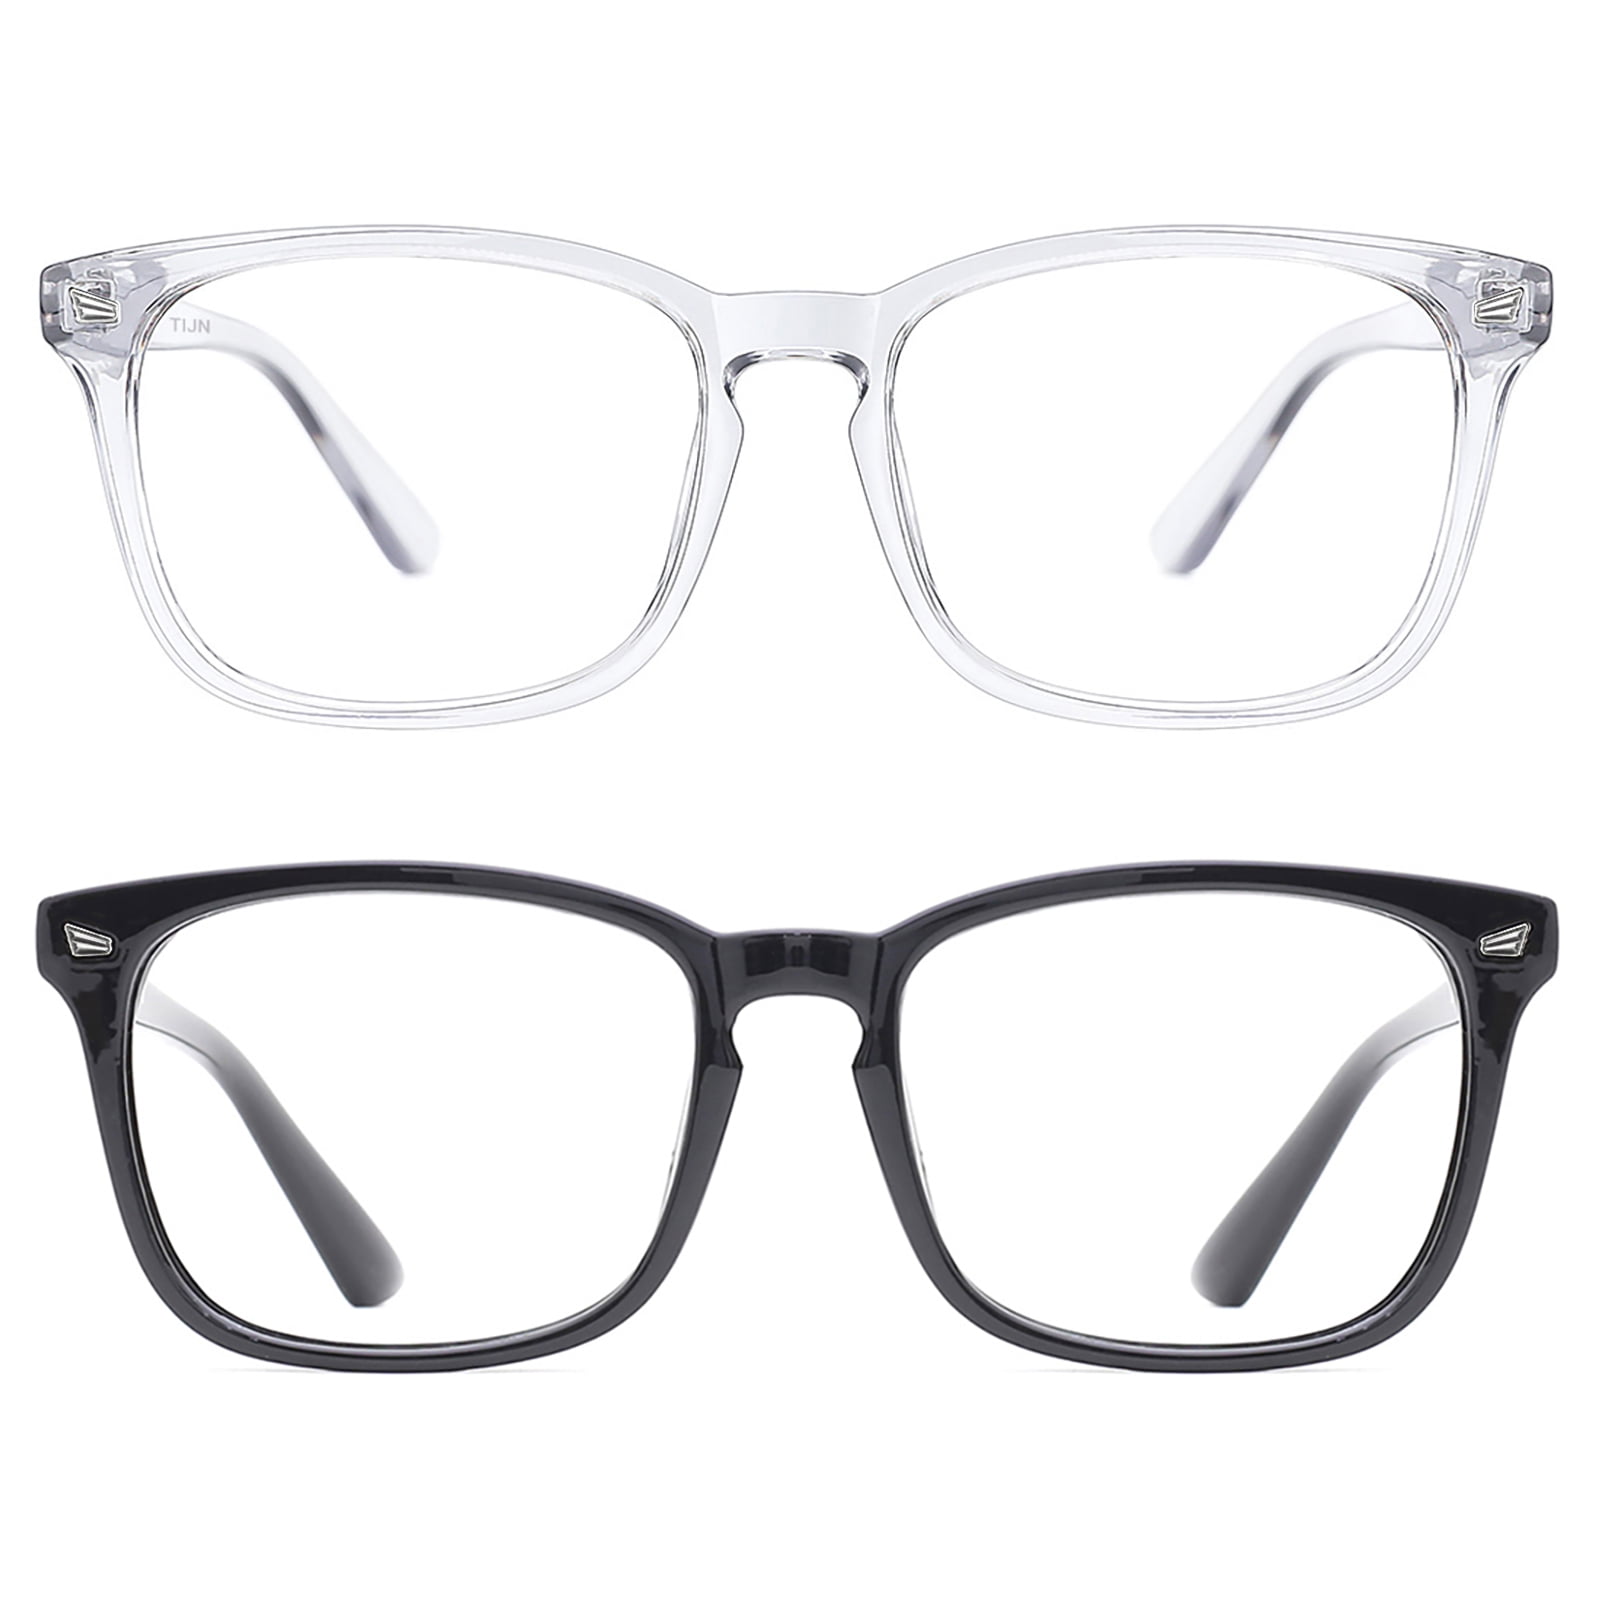 TIJN Unisex Stylish Square Fake Glasses Optical Eyewear Clear Lens Women Men Computer Eyeglasses 